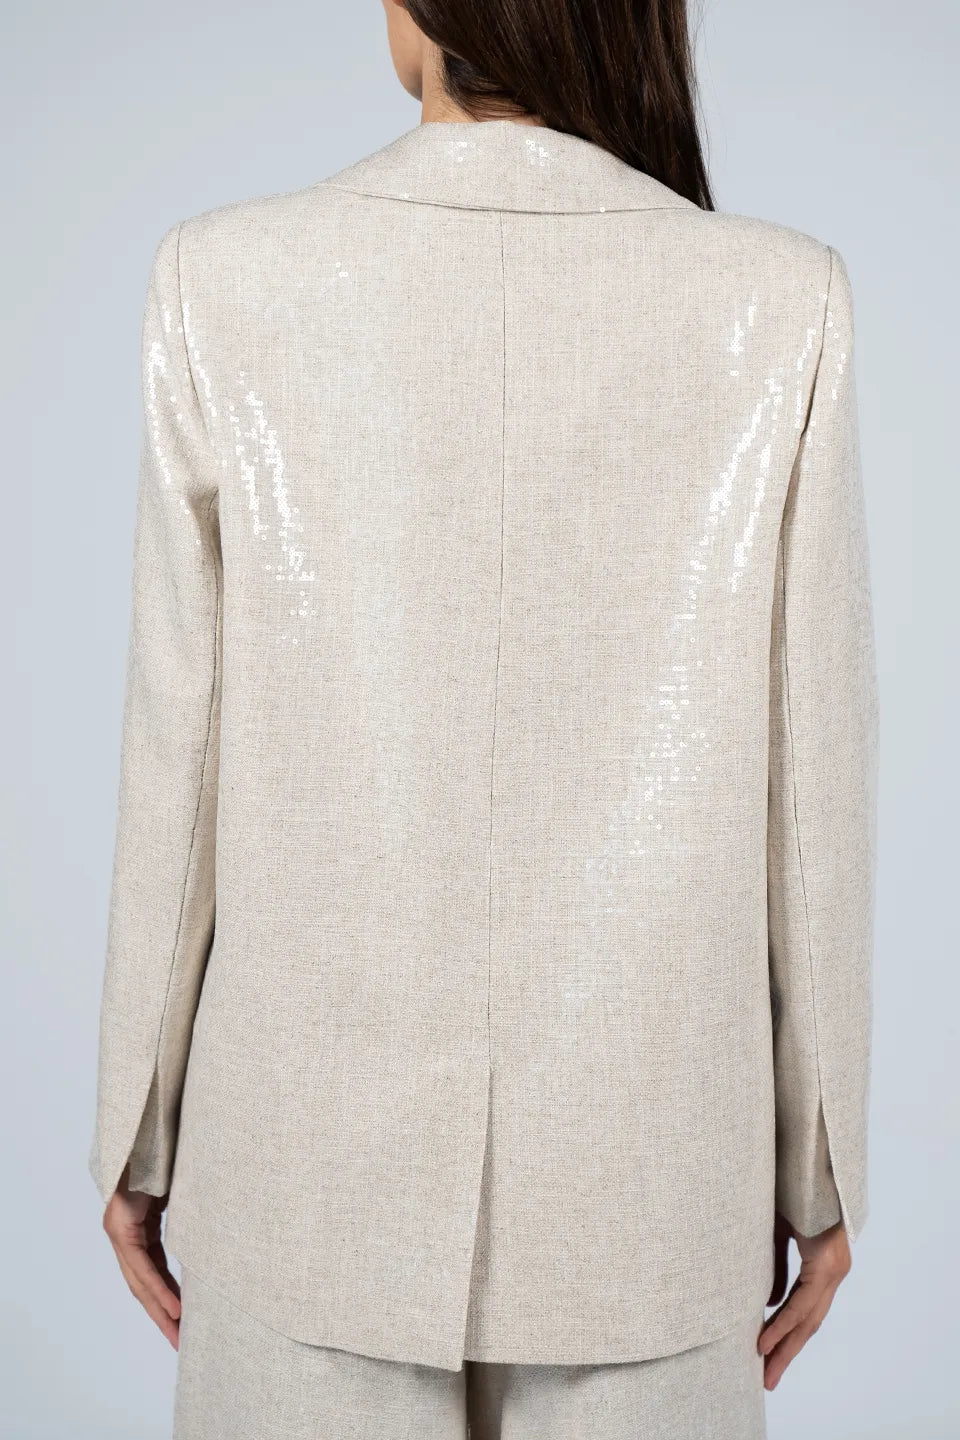 Designer Beige Women blazers, Jacket, shop online with free delivery in UAE. Product gallery 7